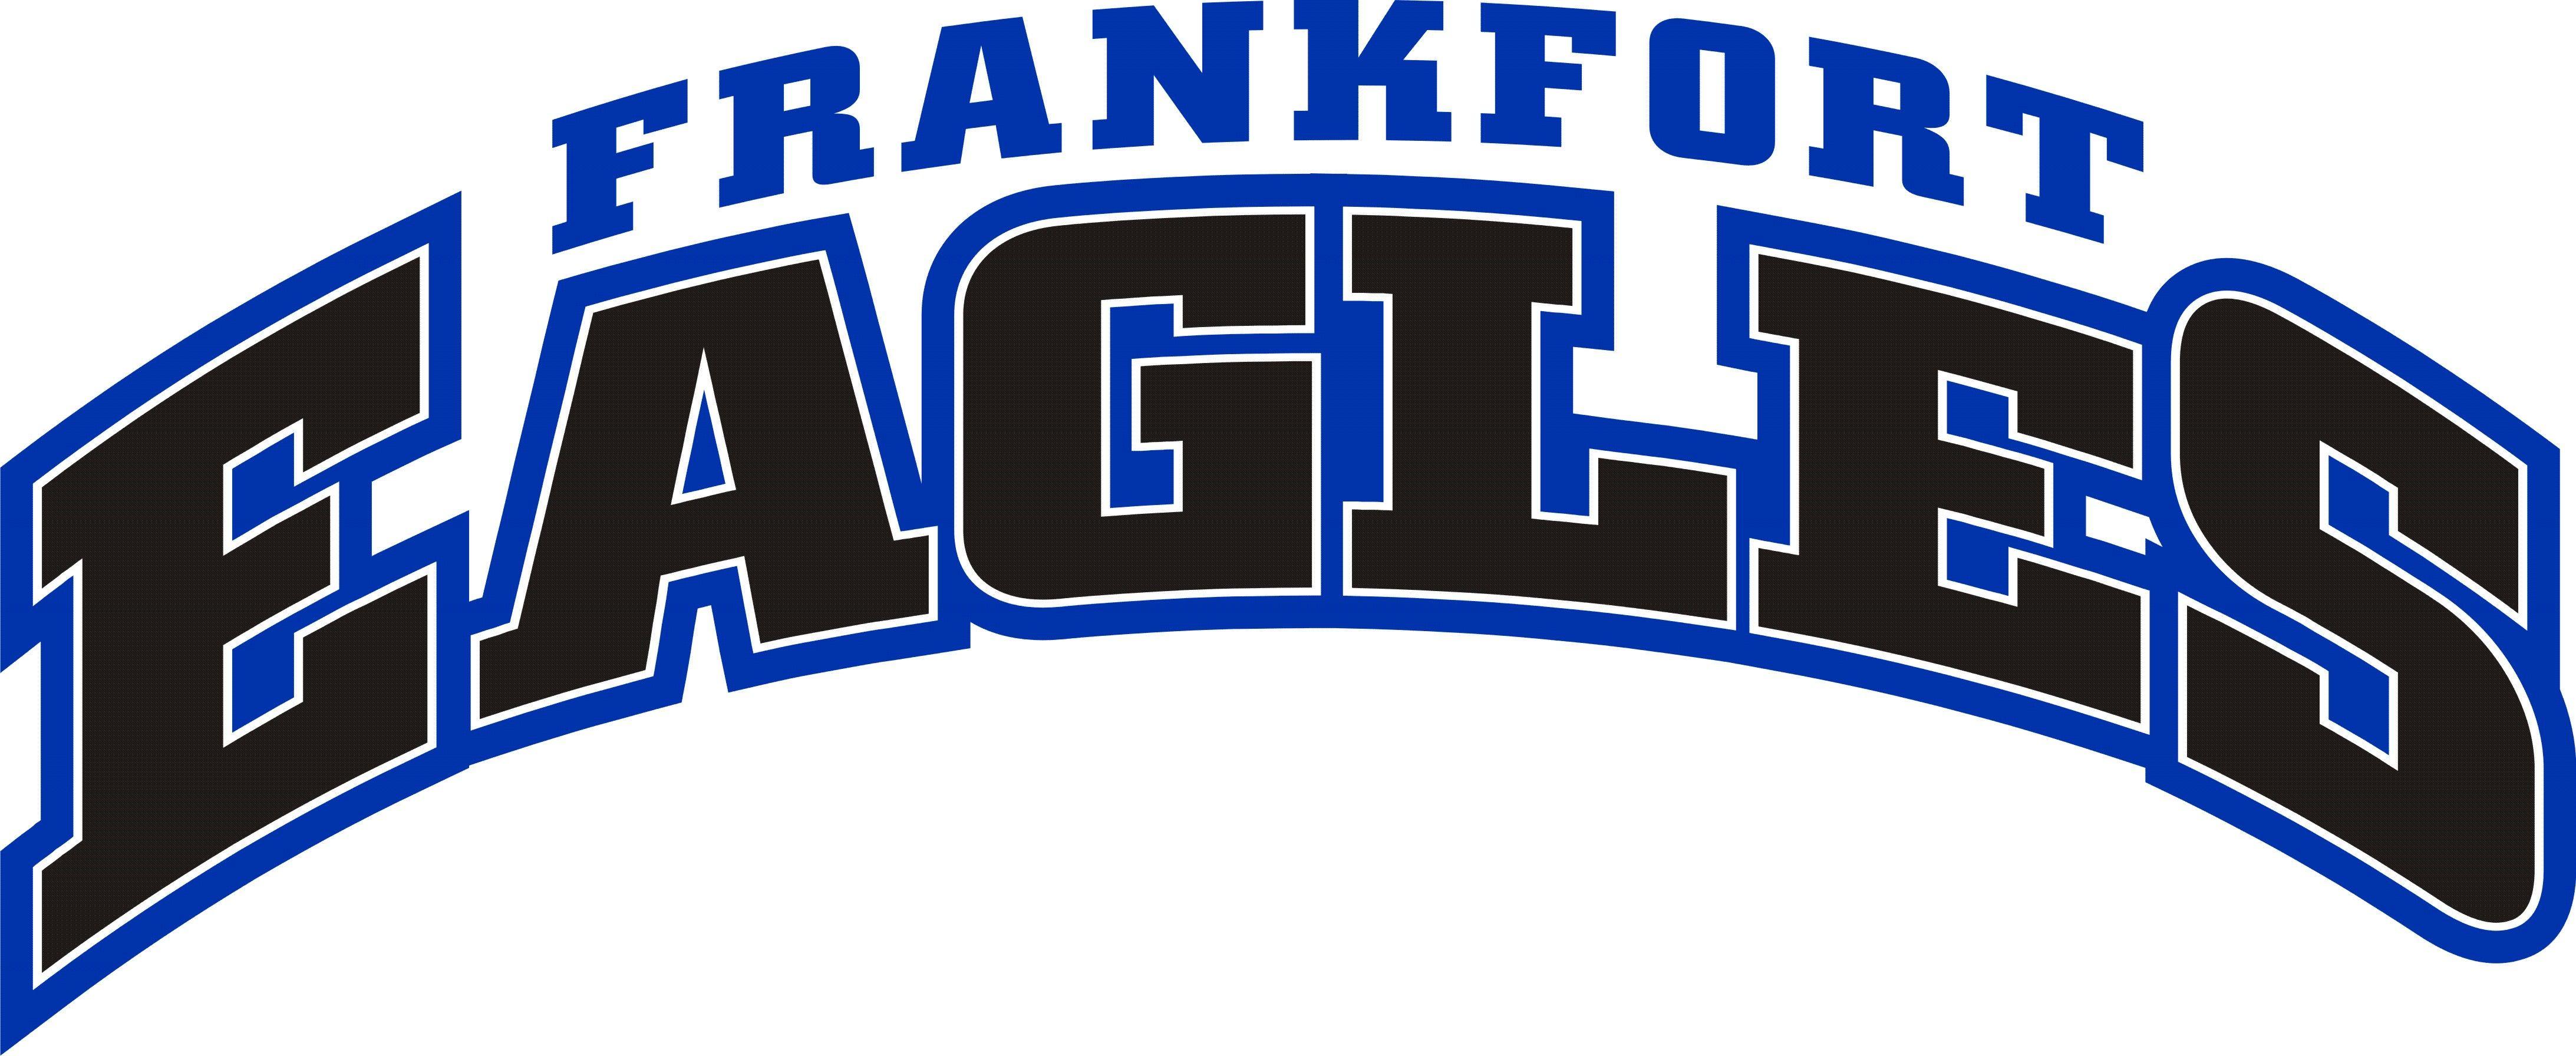 Frankfort Logo - Documents | Frankfort Boys Baseball Inc